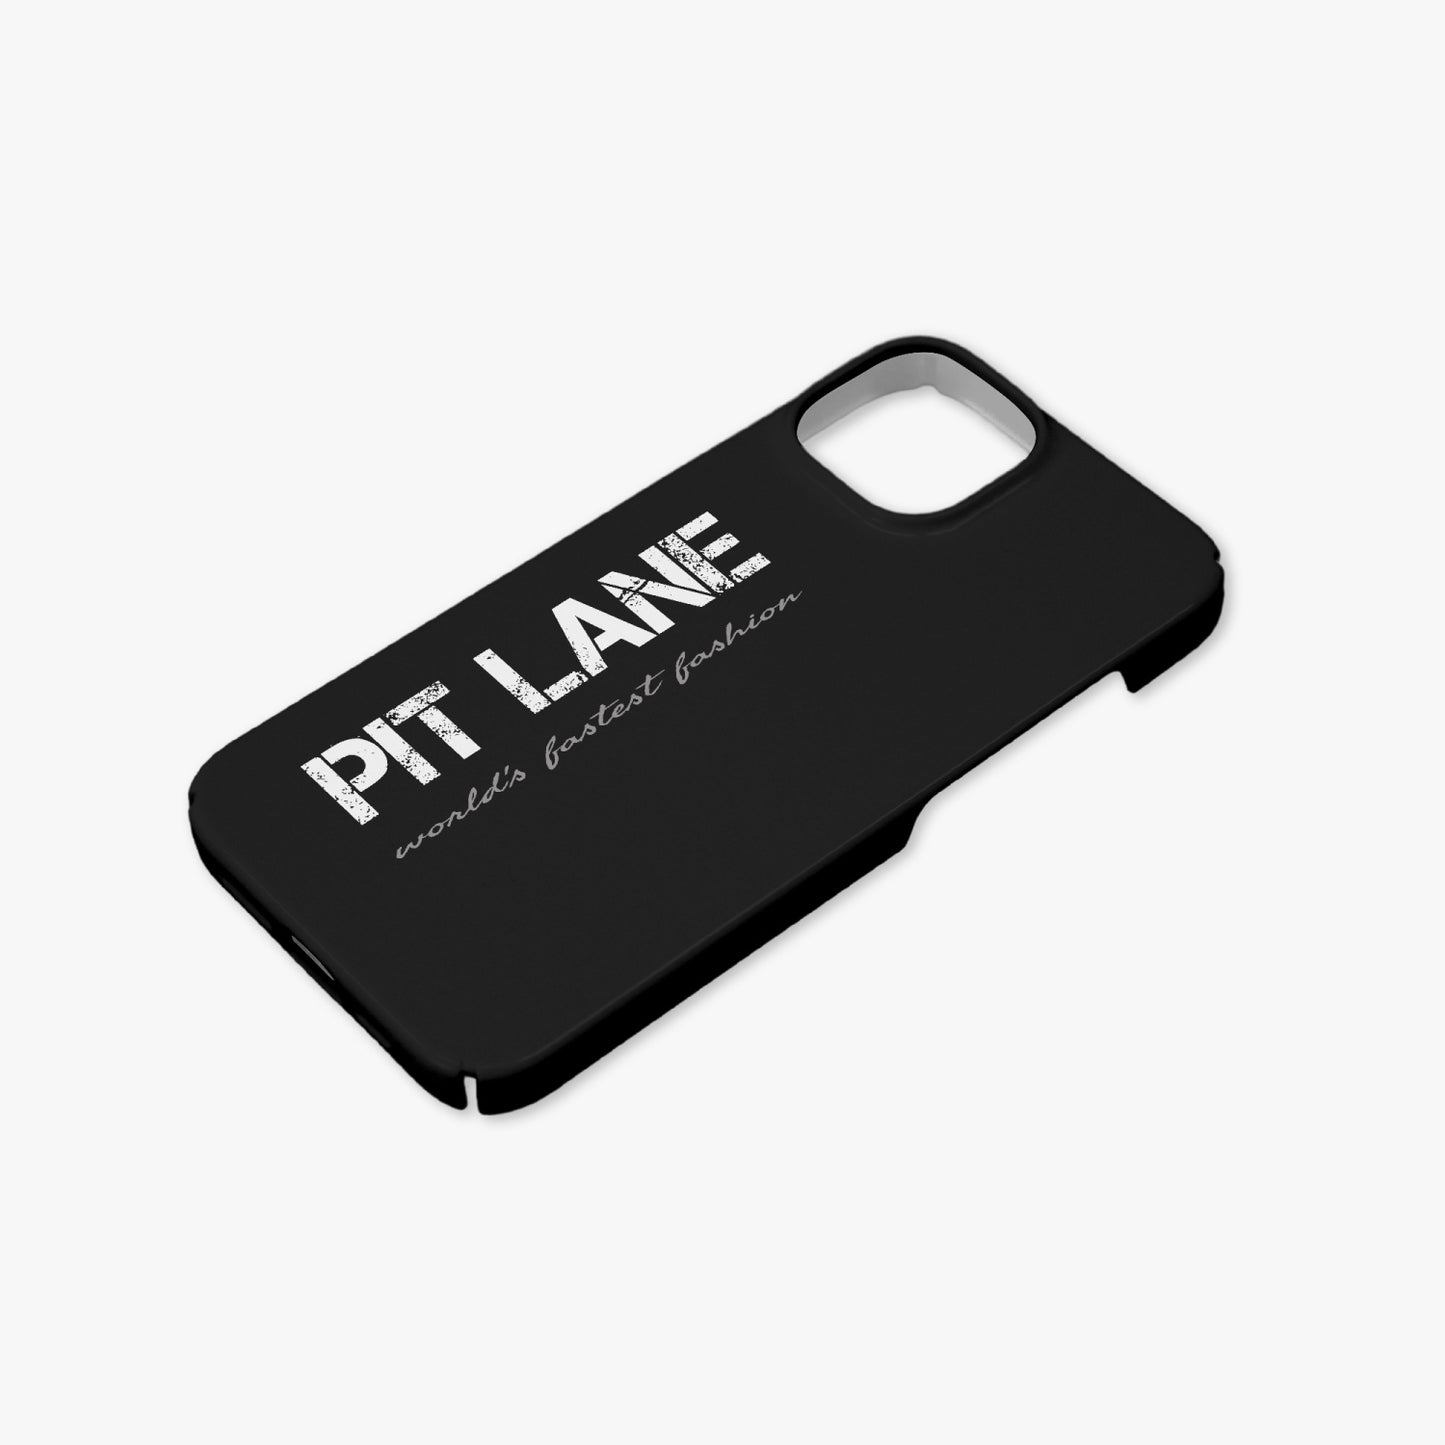 PIT LANE CLOTHING iPhone Protection Case